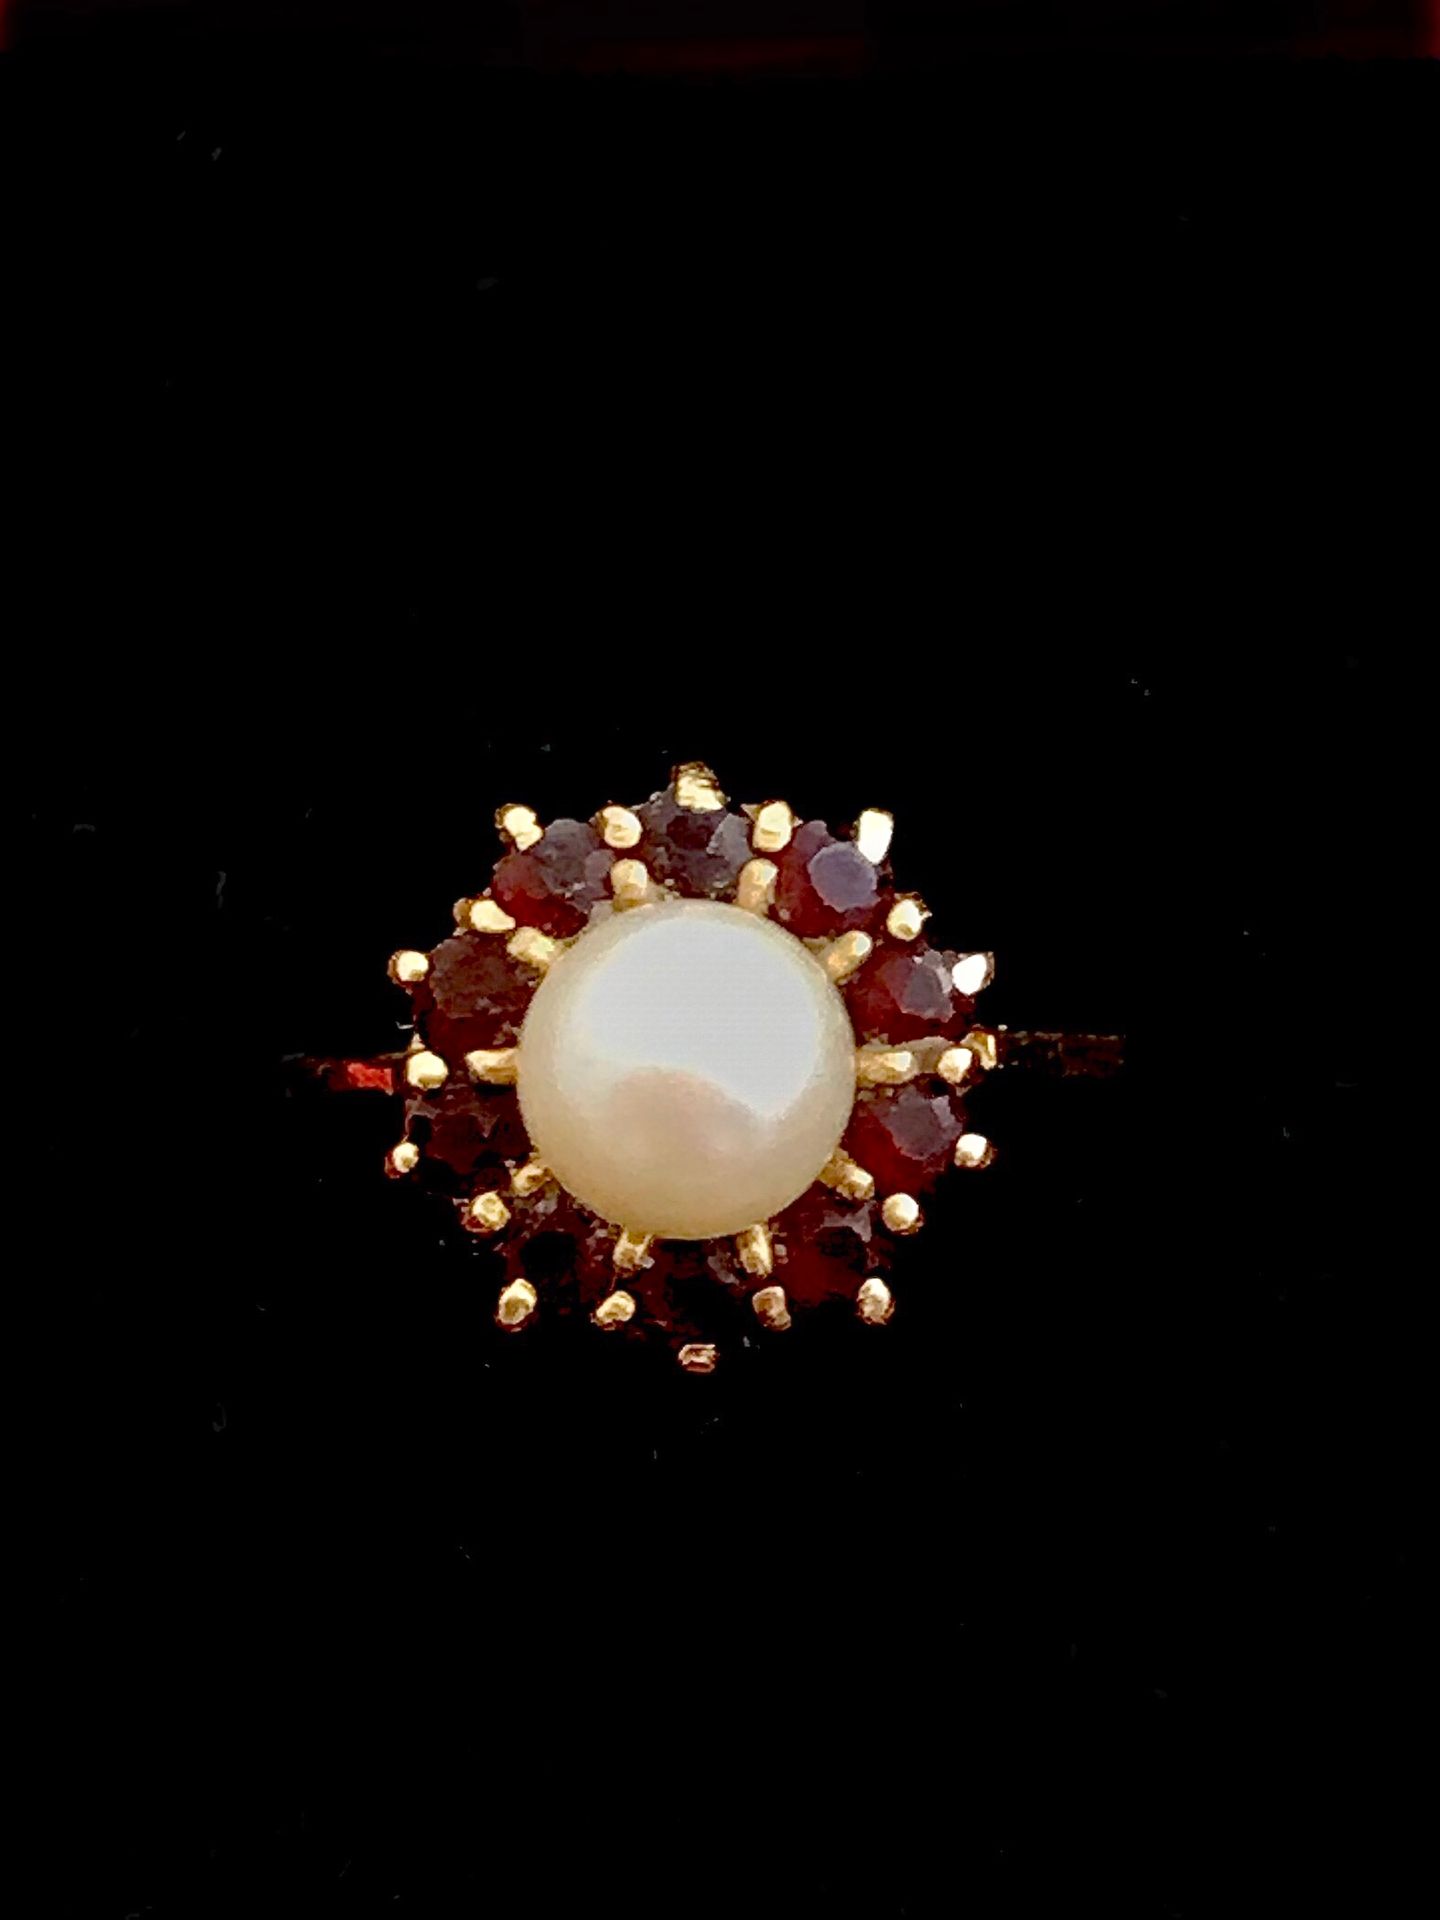 Null 雏菊戒指，18K黄金750°/00，以一颗养殖珍珠为中心，镶嵌圆形明亮式切割杏仁石榴石。设计的直径：8毫米。TDD 57, 毛重: 4.10 g.